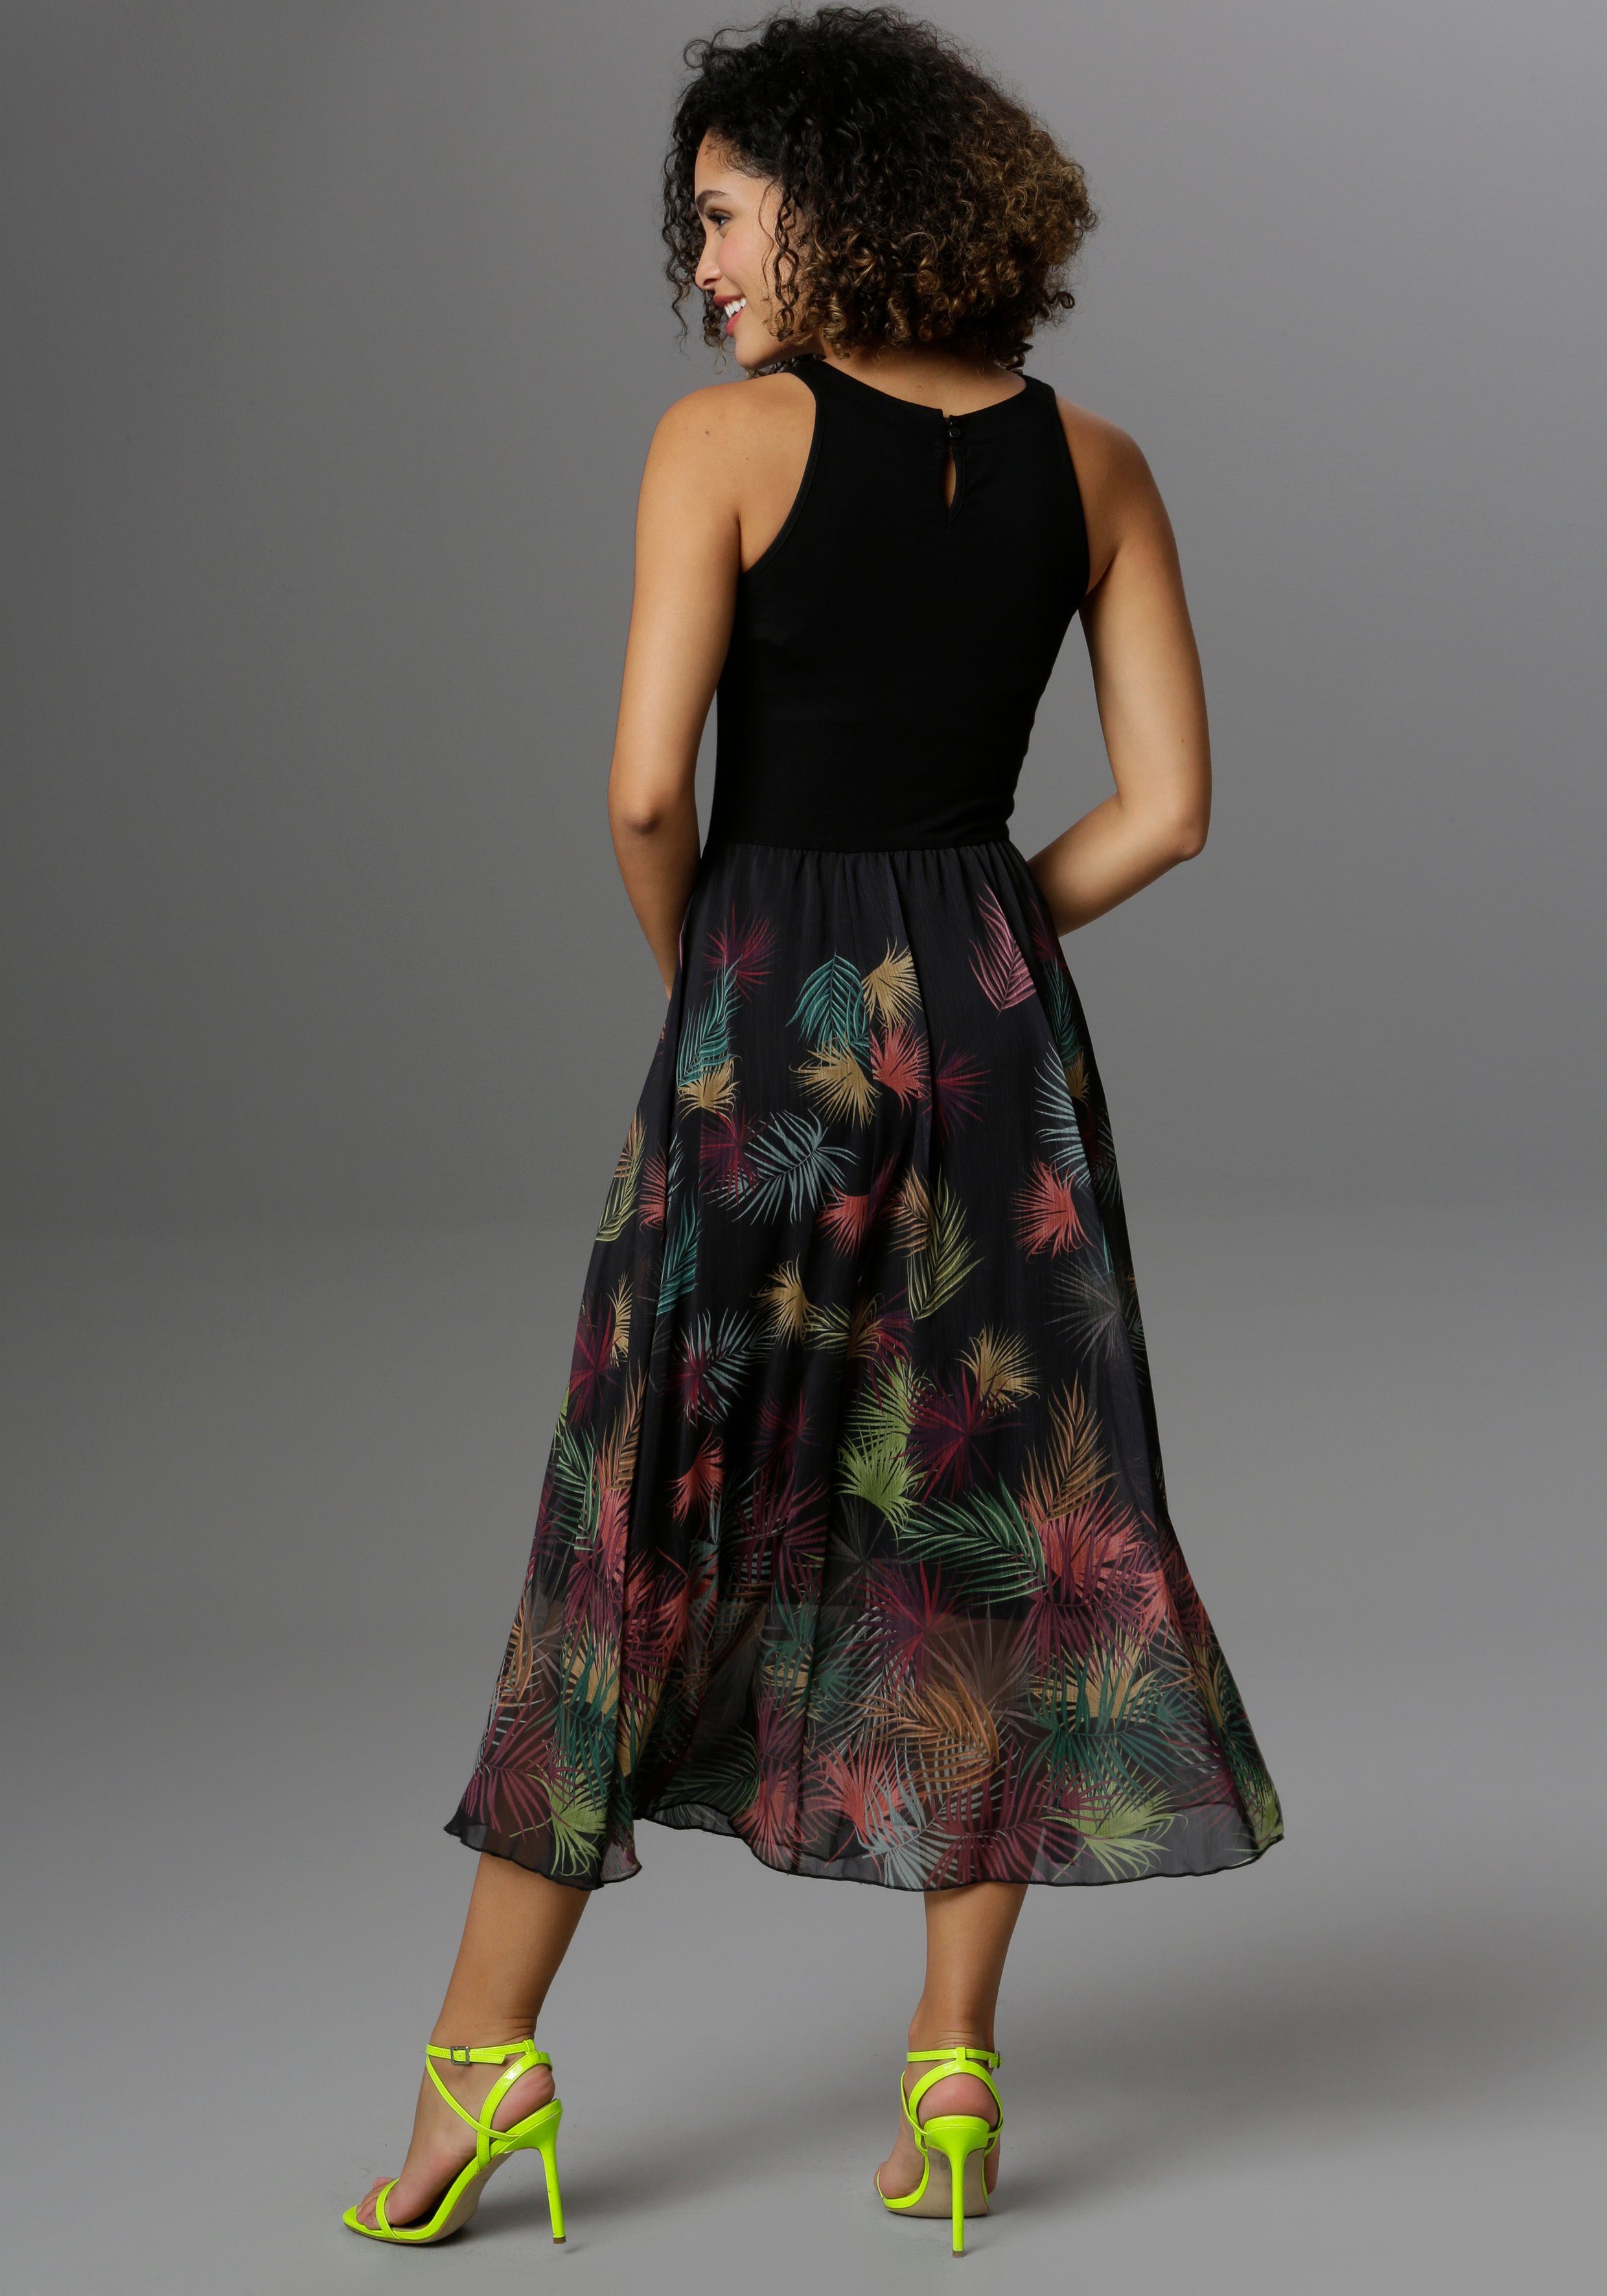 Aniston SELECTED Blätterdruck mit buntem Sommerkleid